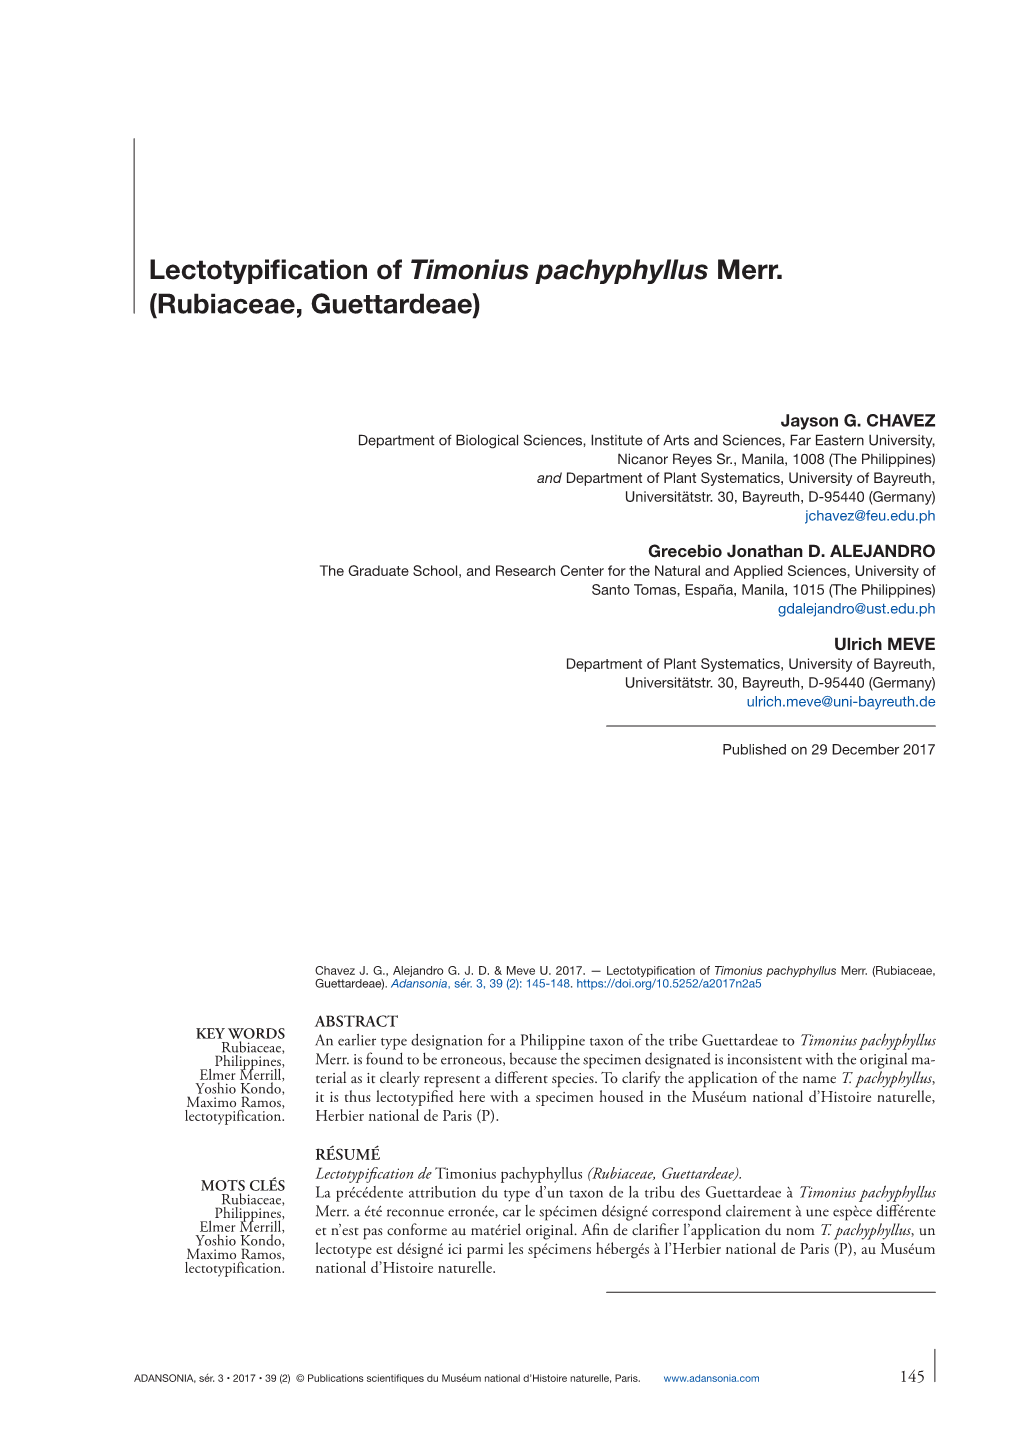 Lectotypification of Timonius Pachyphyllus Merr. (Rubiaceae, Guettardeae)